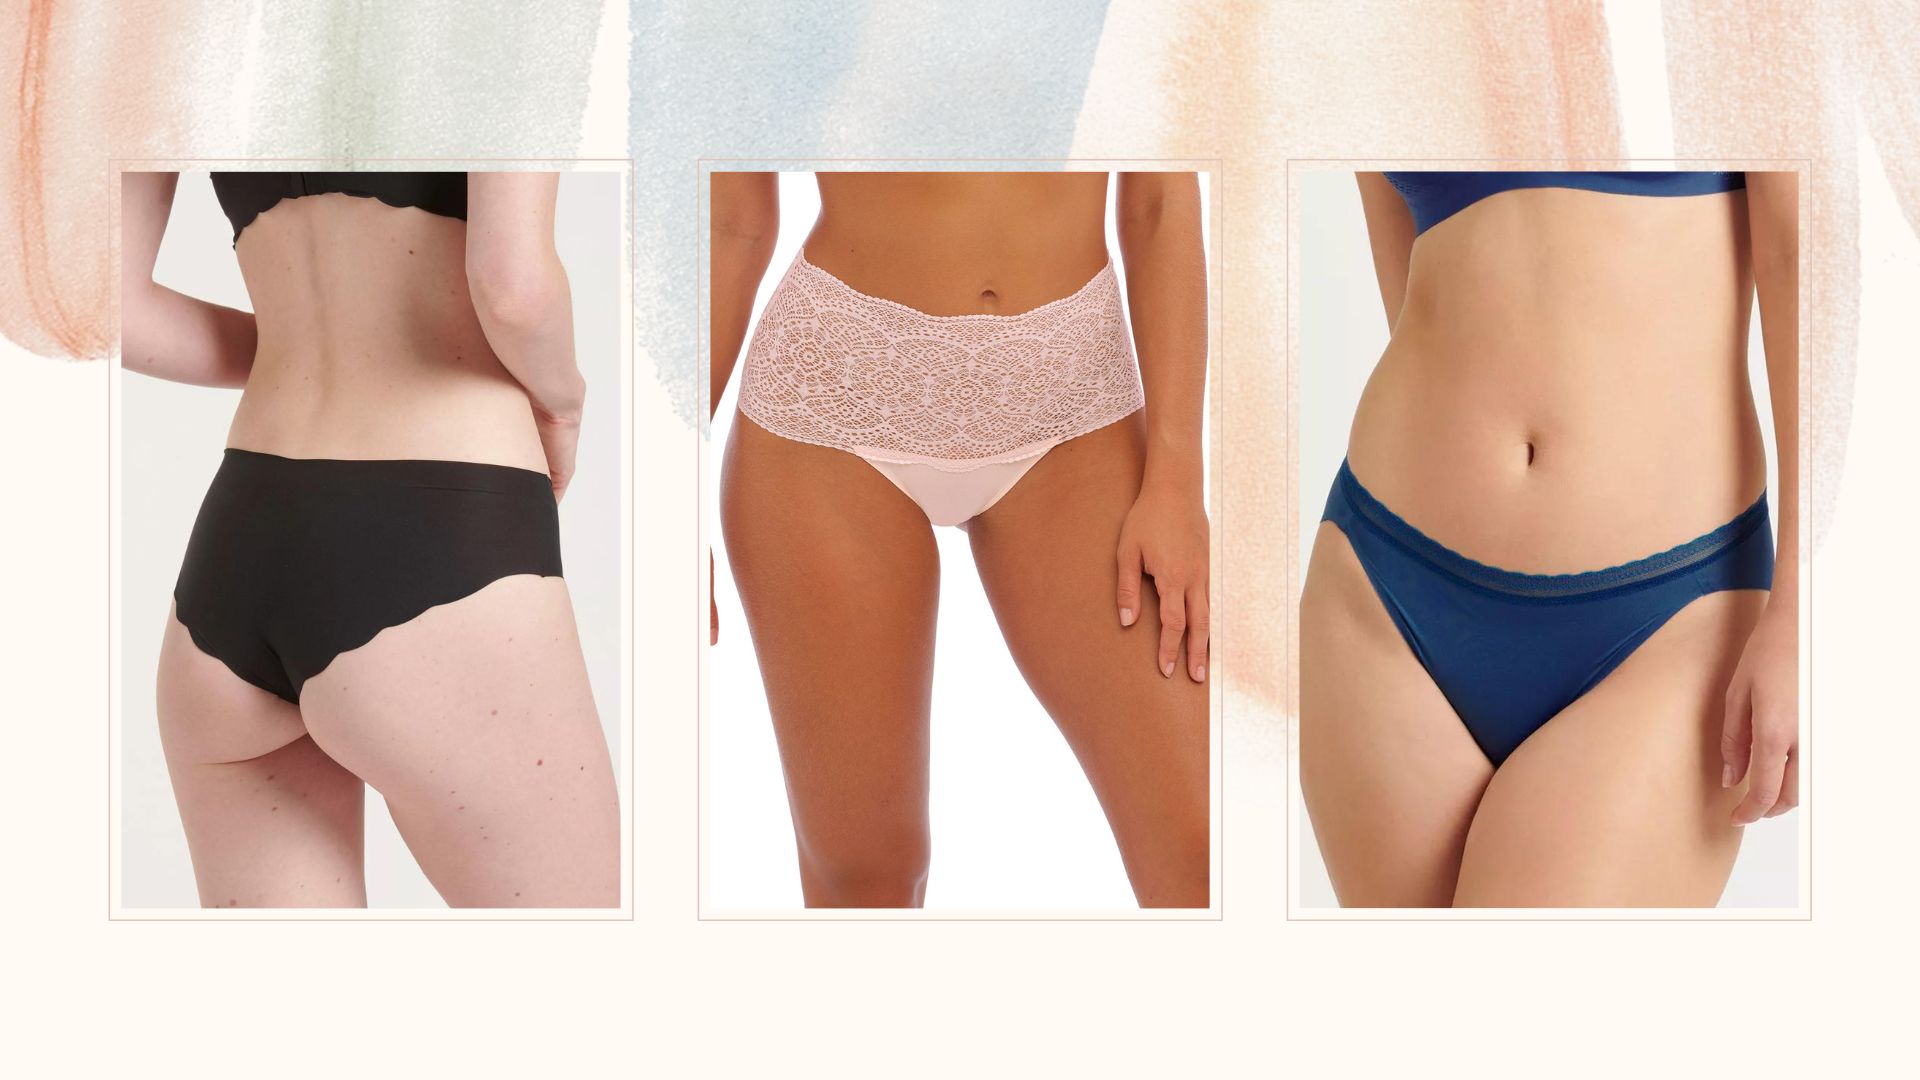 We tested these 'soft' and 'seam-free' Sloggi underwear scanning